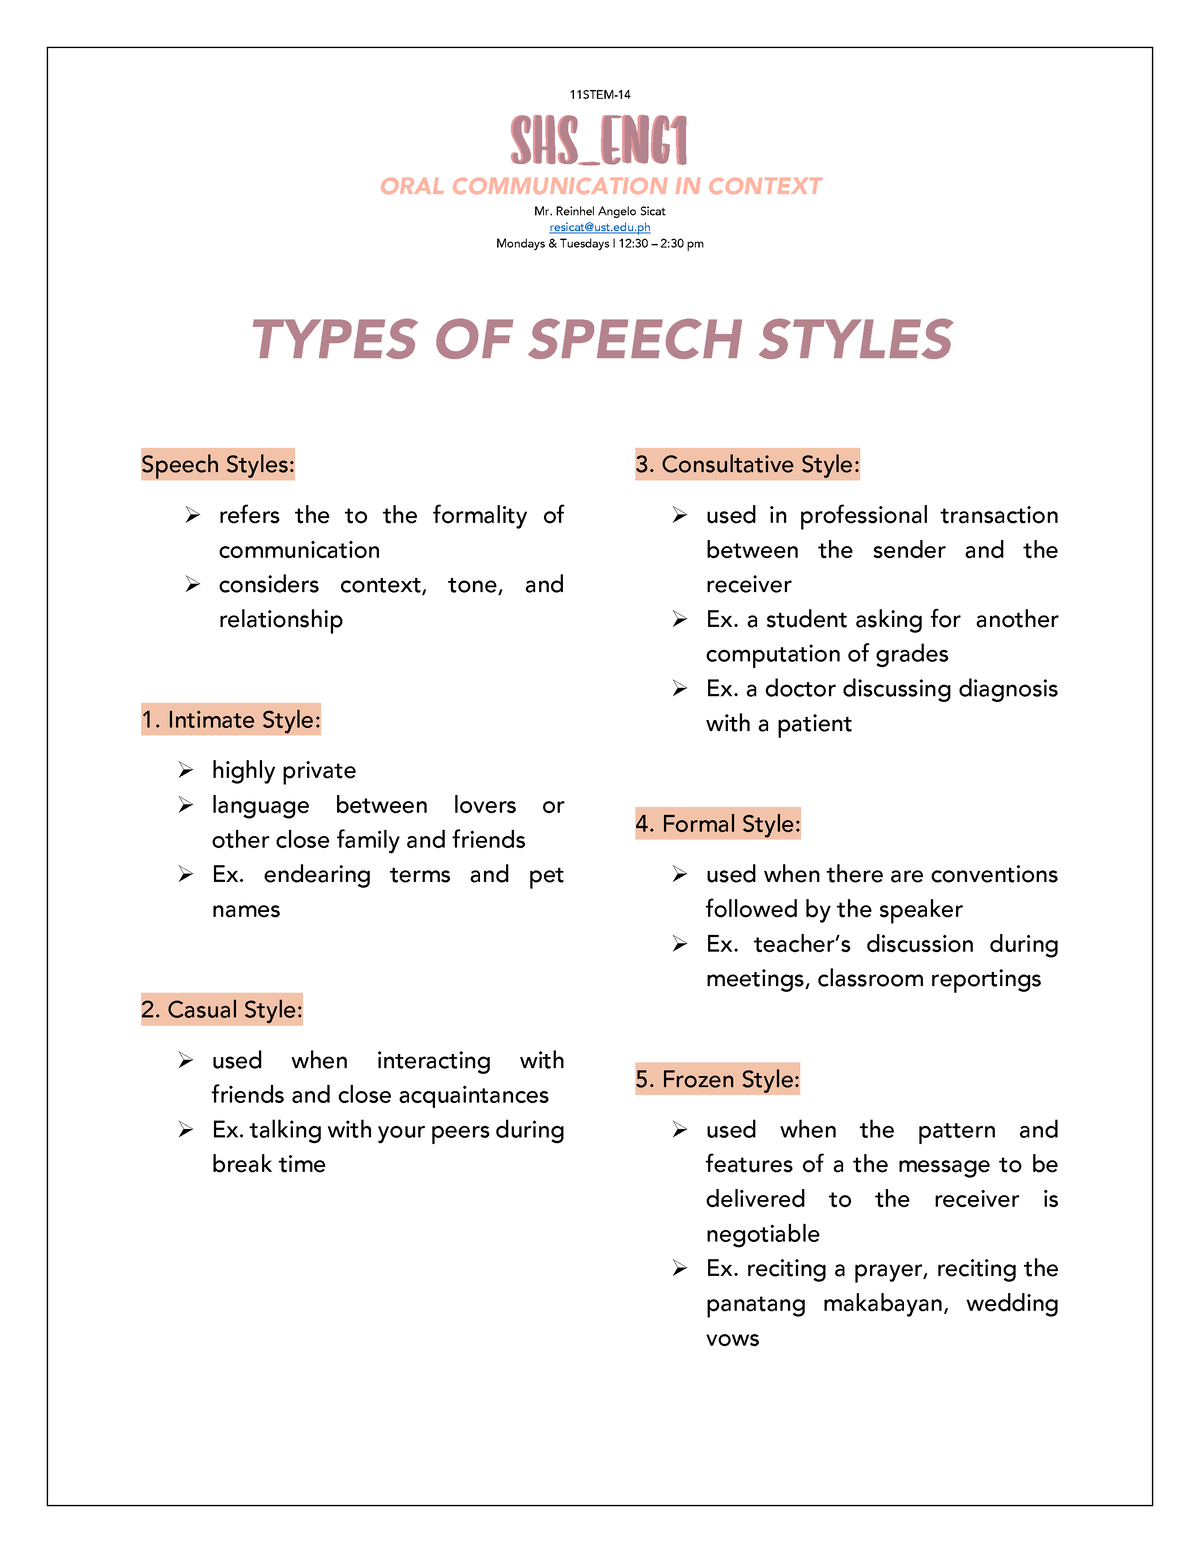 oral communication speech style module